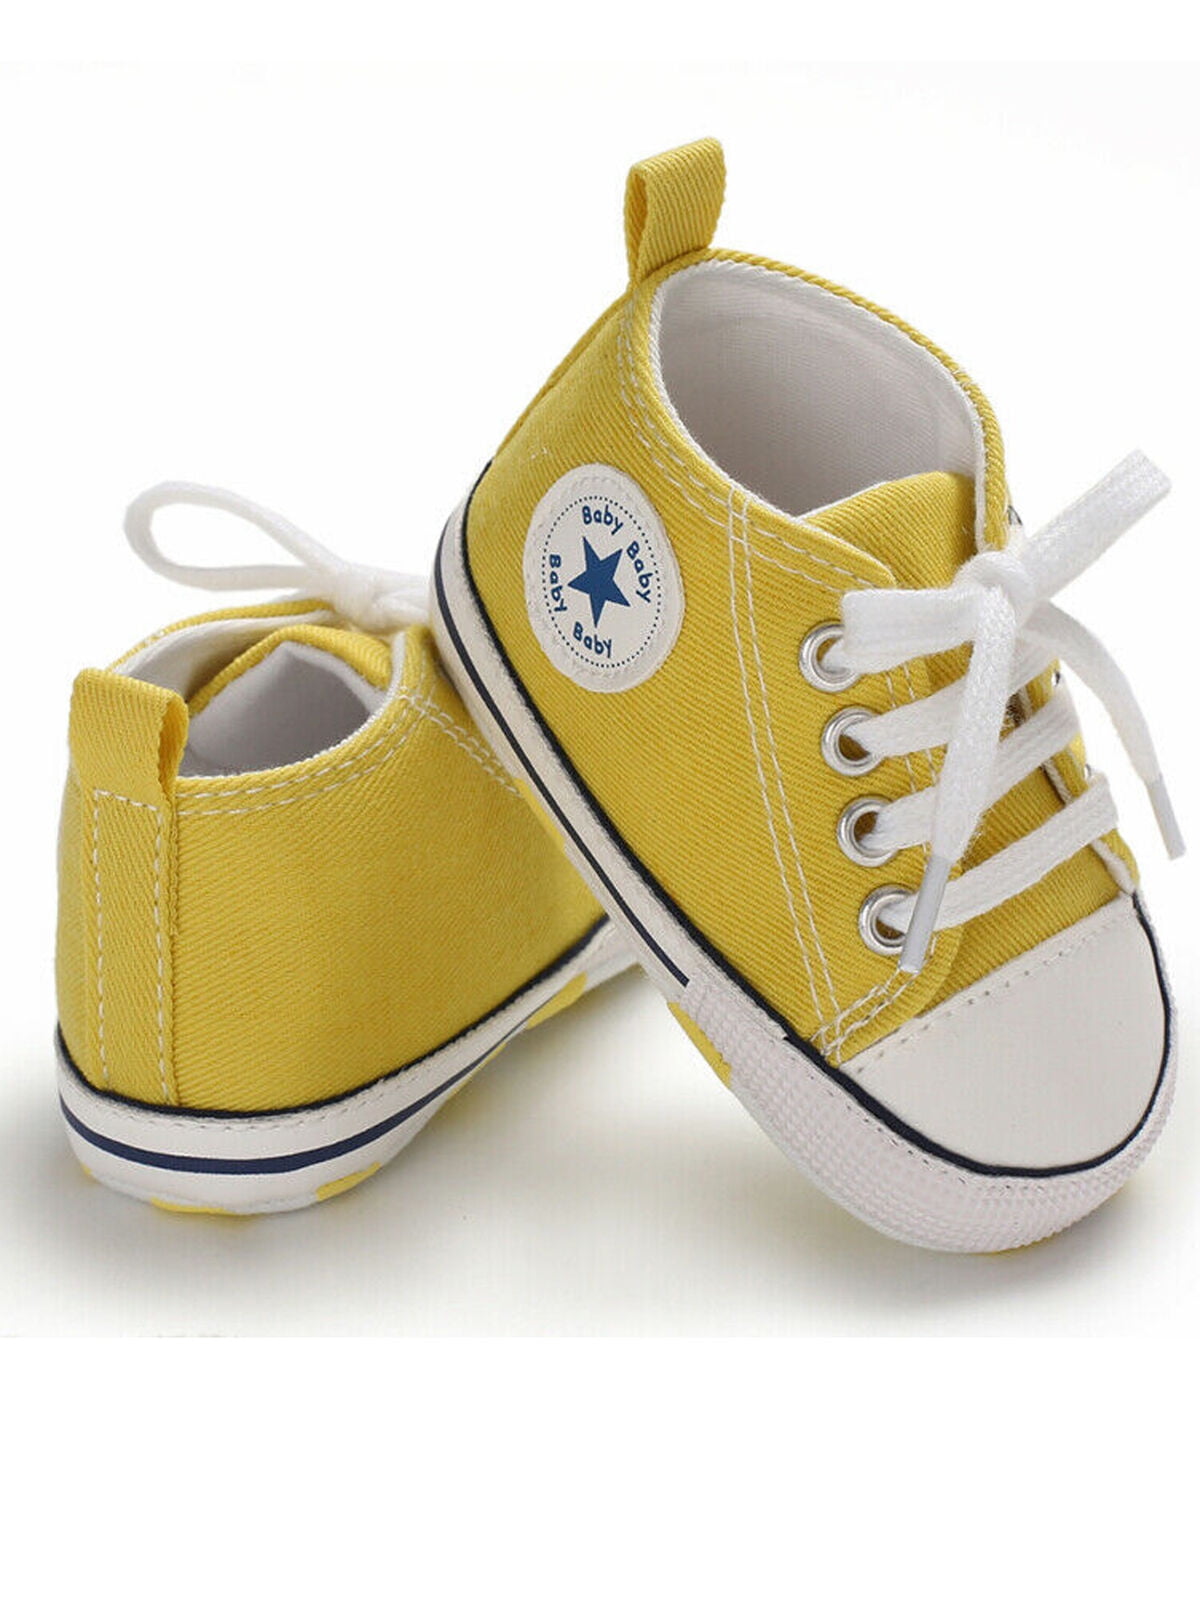 yellow shoes walmart